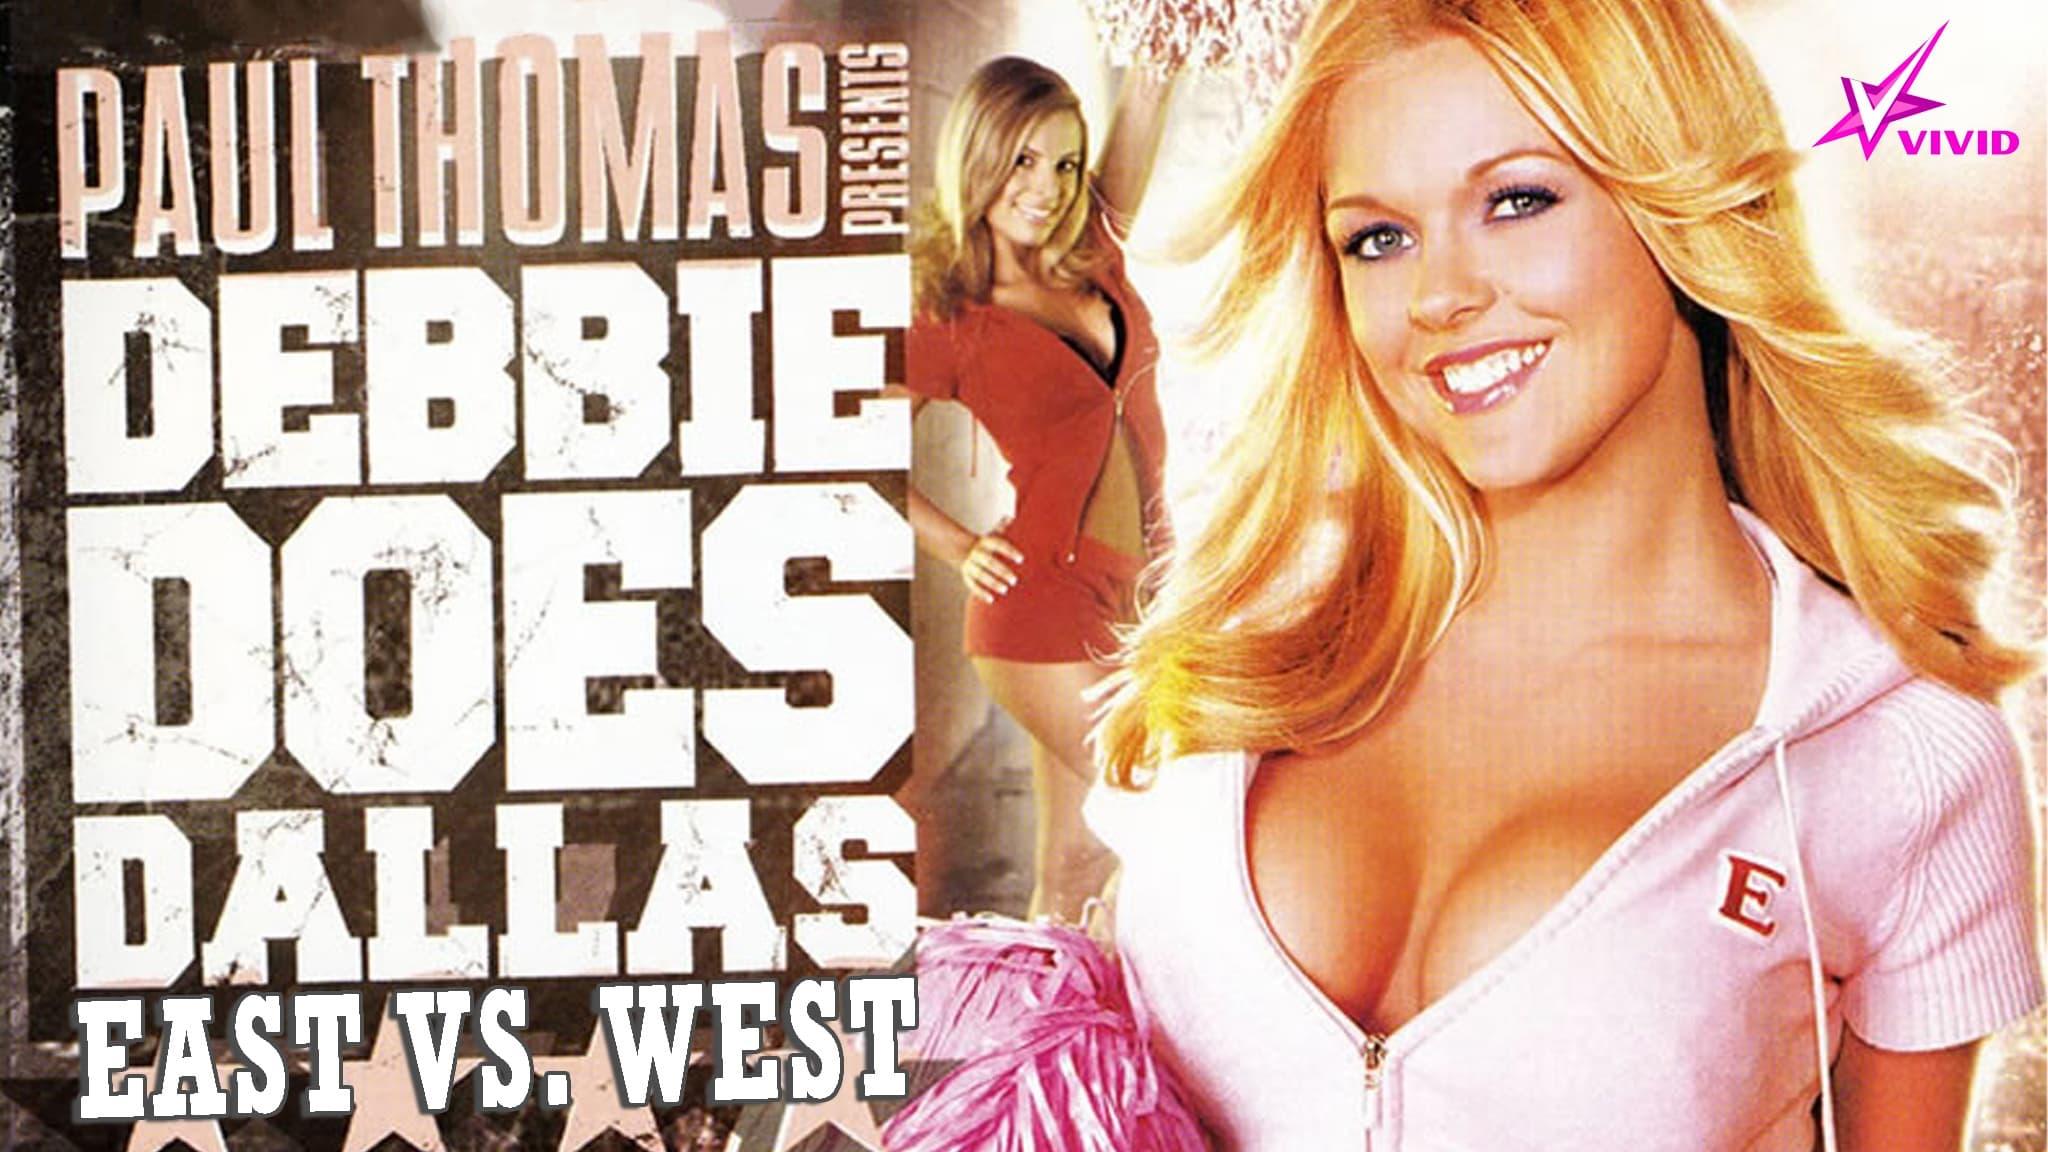 Debbie Does Dallas: East vs West backdrop